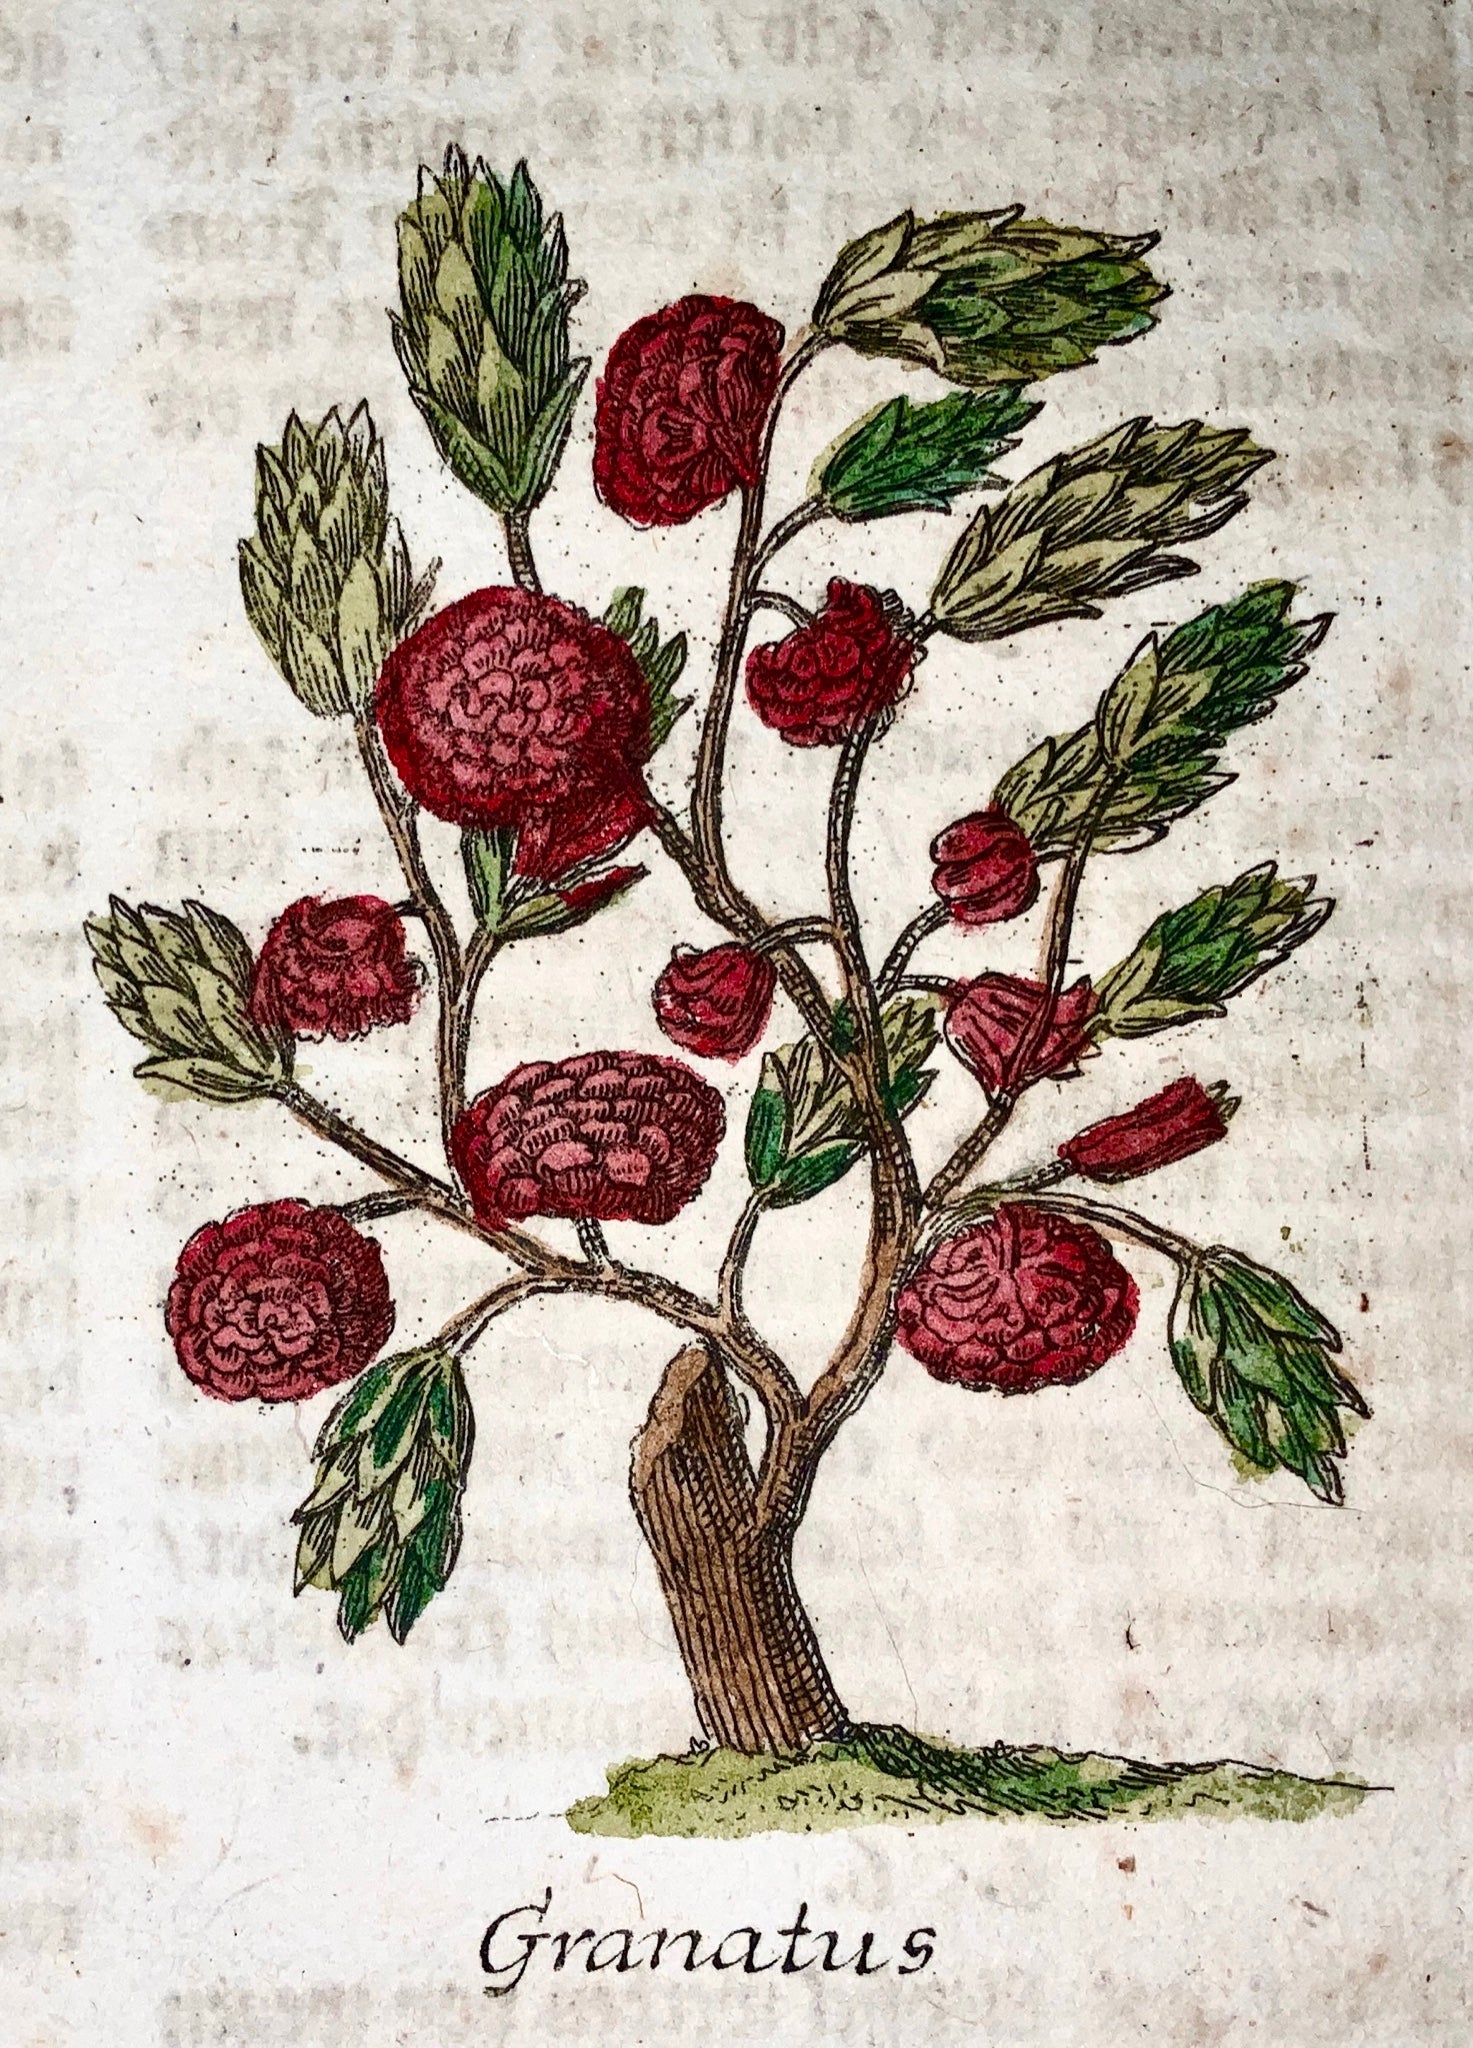 1704 Fruit: Balausta Pomegranate - M. Valentini (1657-1729) - copper engraving - Botany